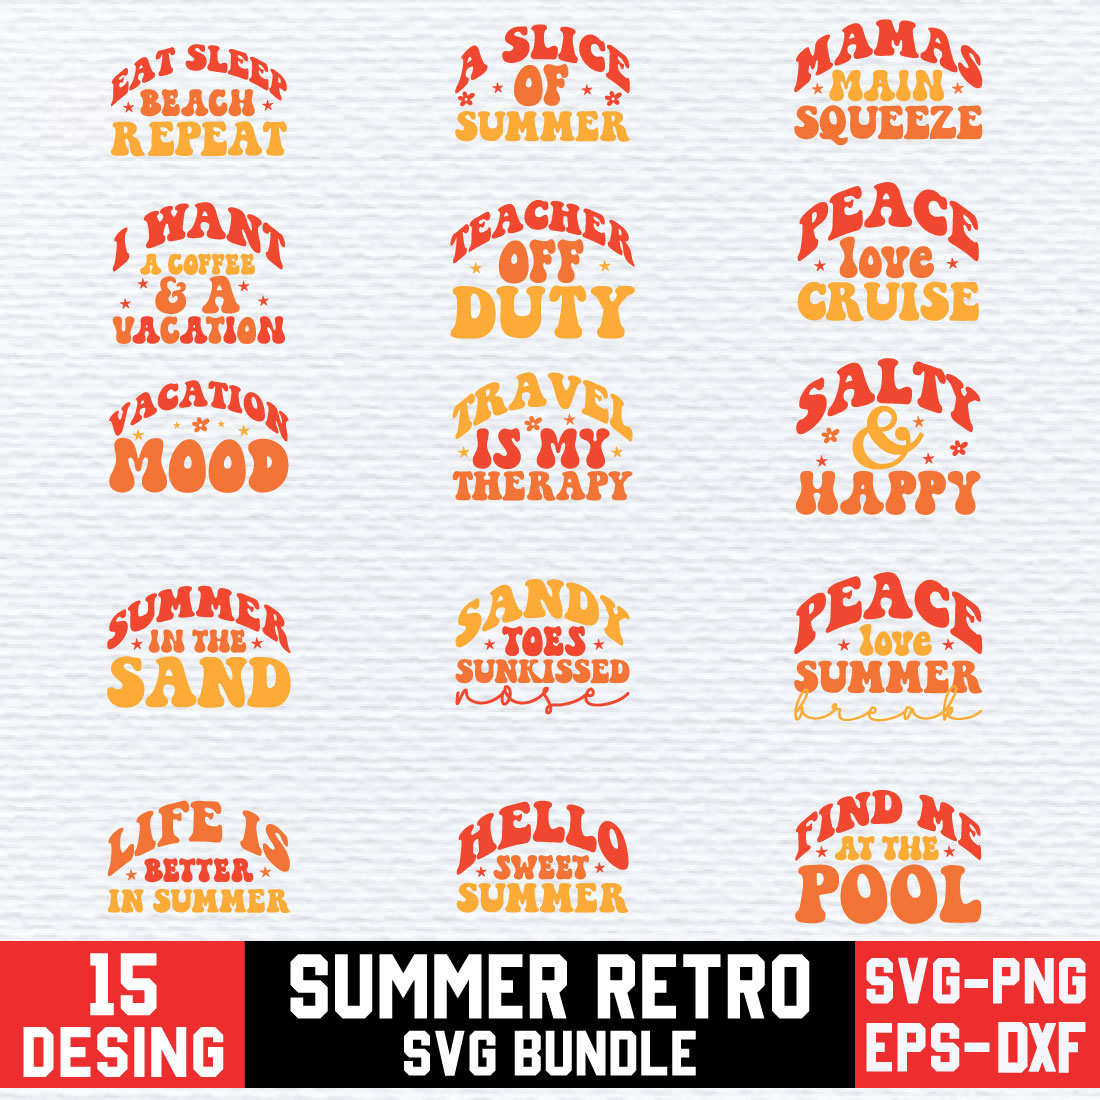 Summer Retro Svg Bundle cover image.